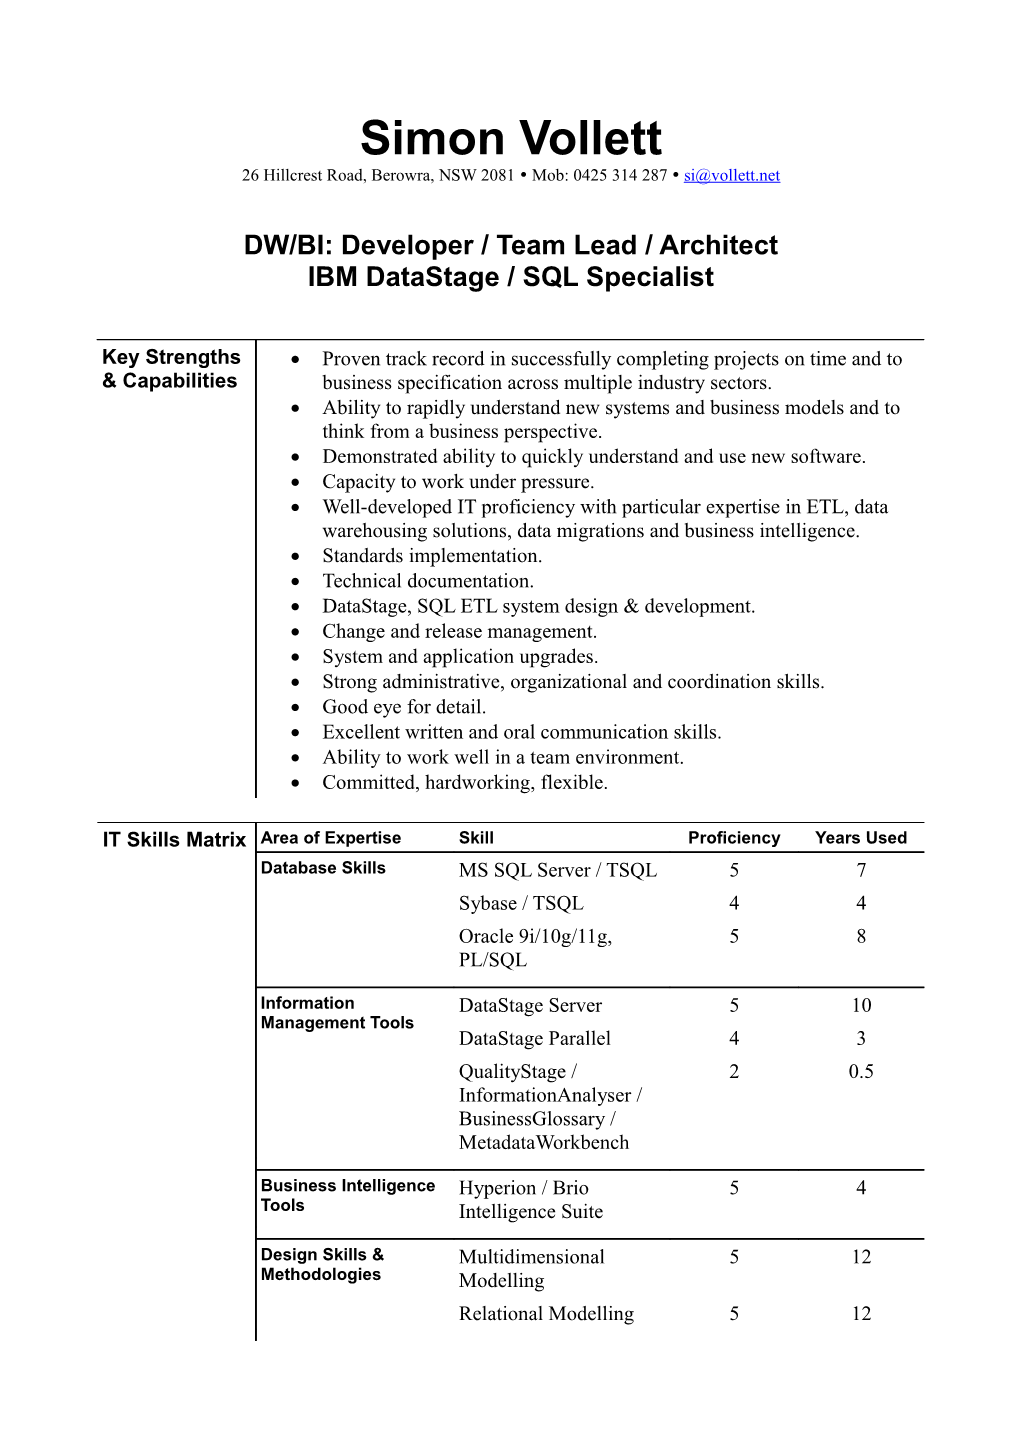 DW/BI: Developer / Team Lead / Architect